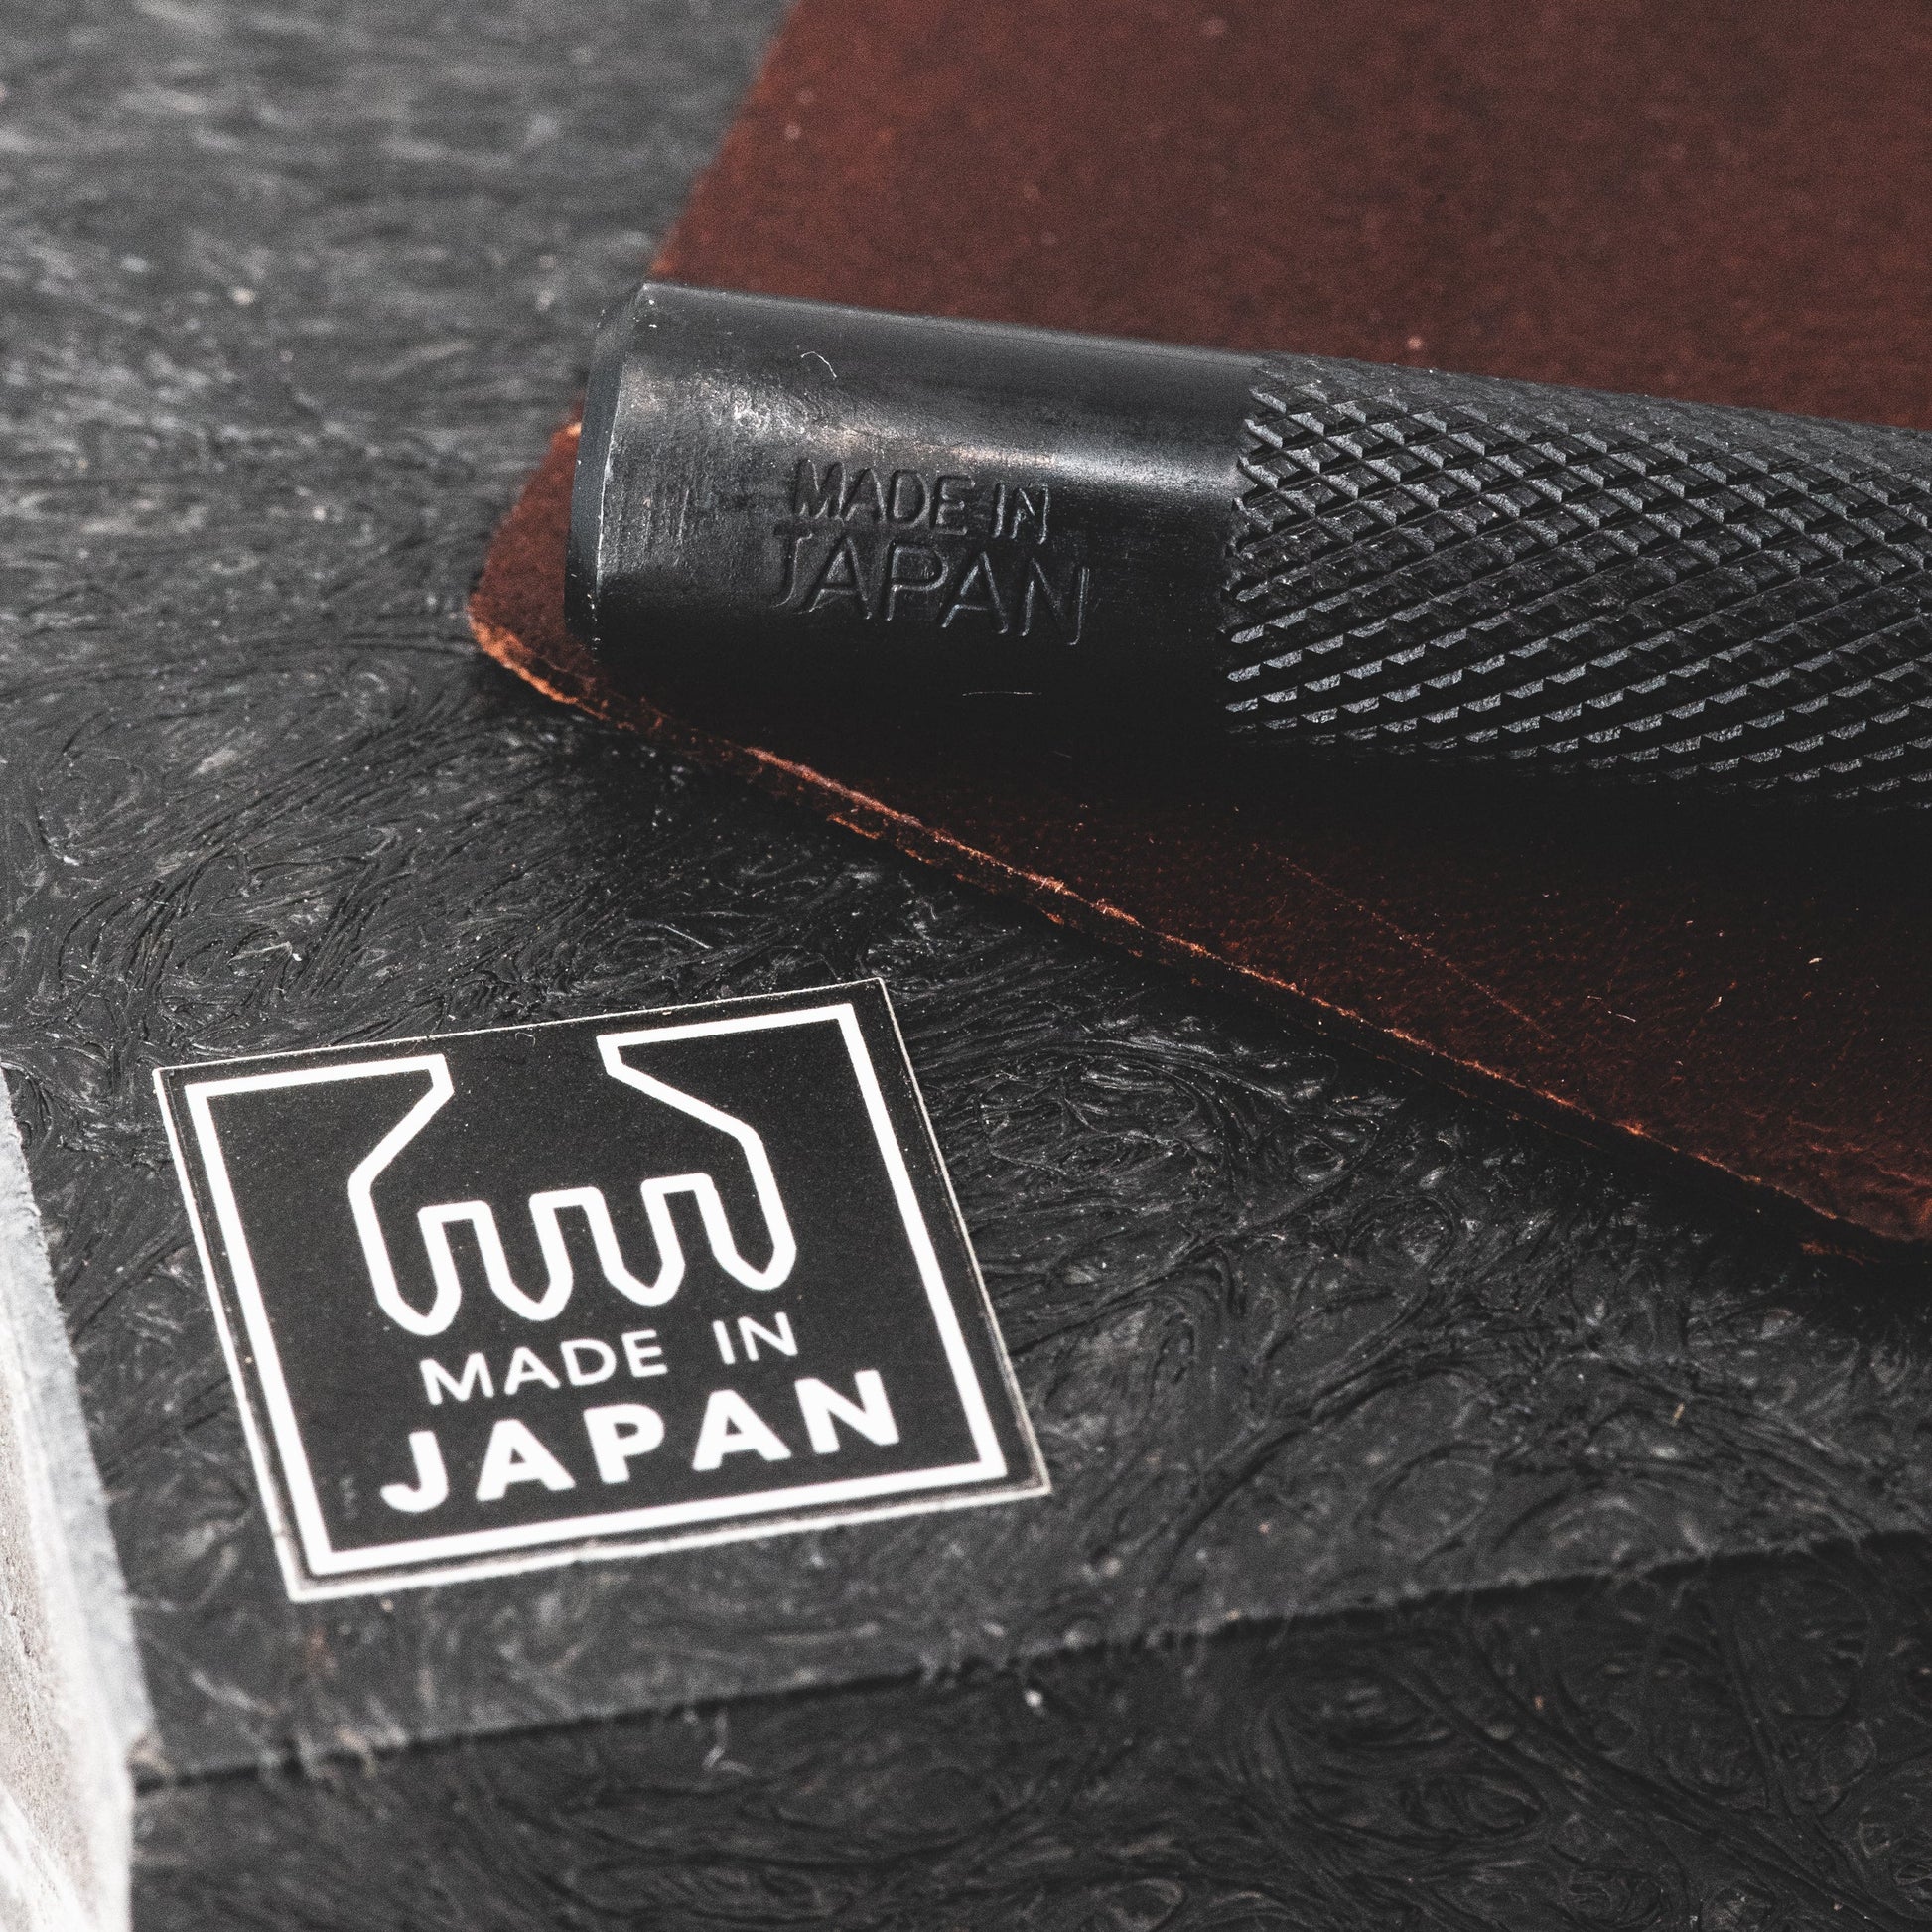 Premium Japanese DIY leathercraft kit - Kohutt™ - made in Tasmania